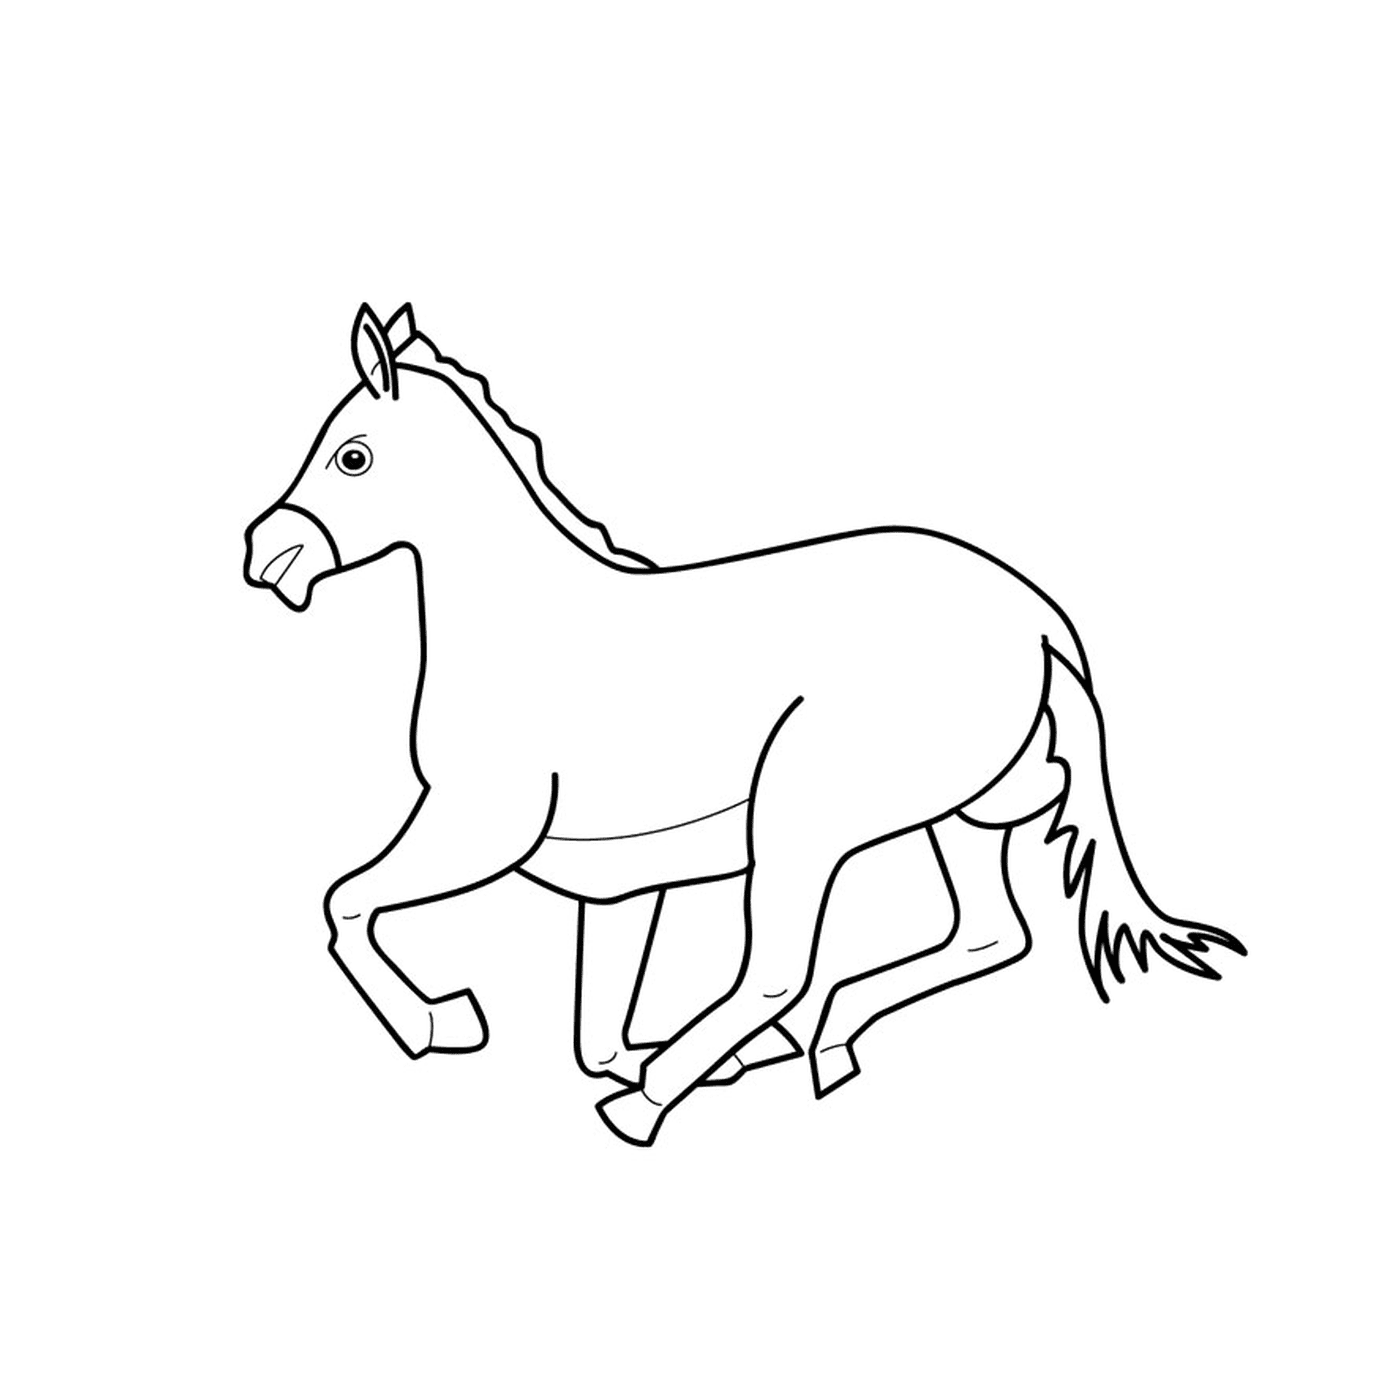  Gallops - Um cavalo correndo 